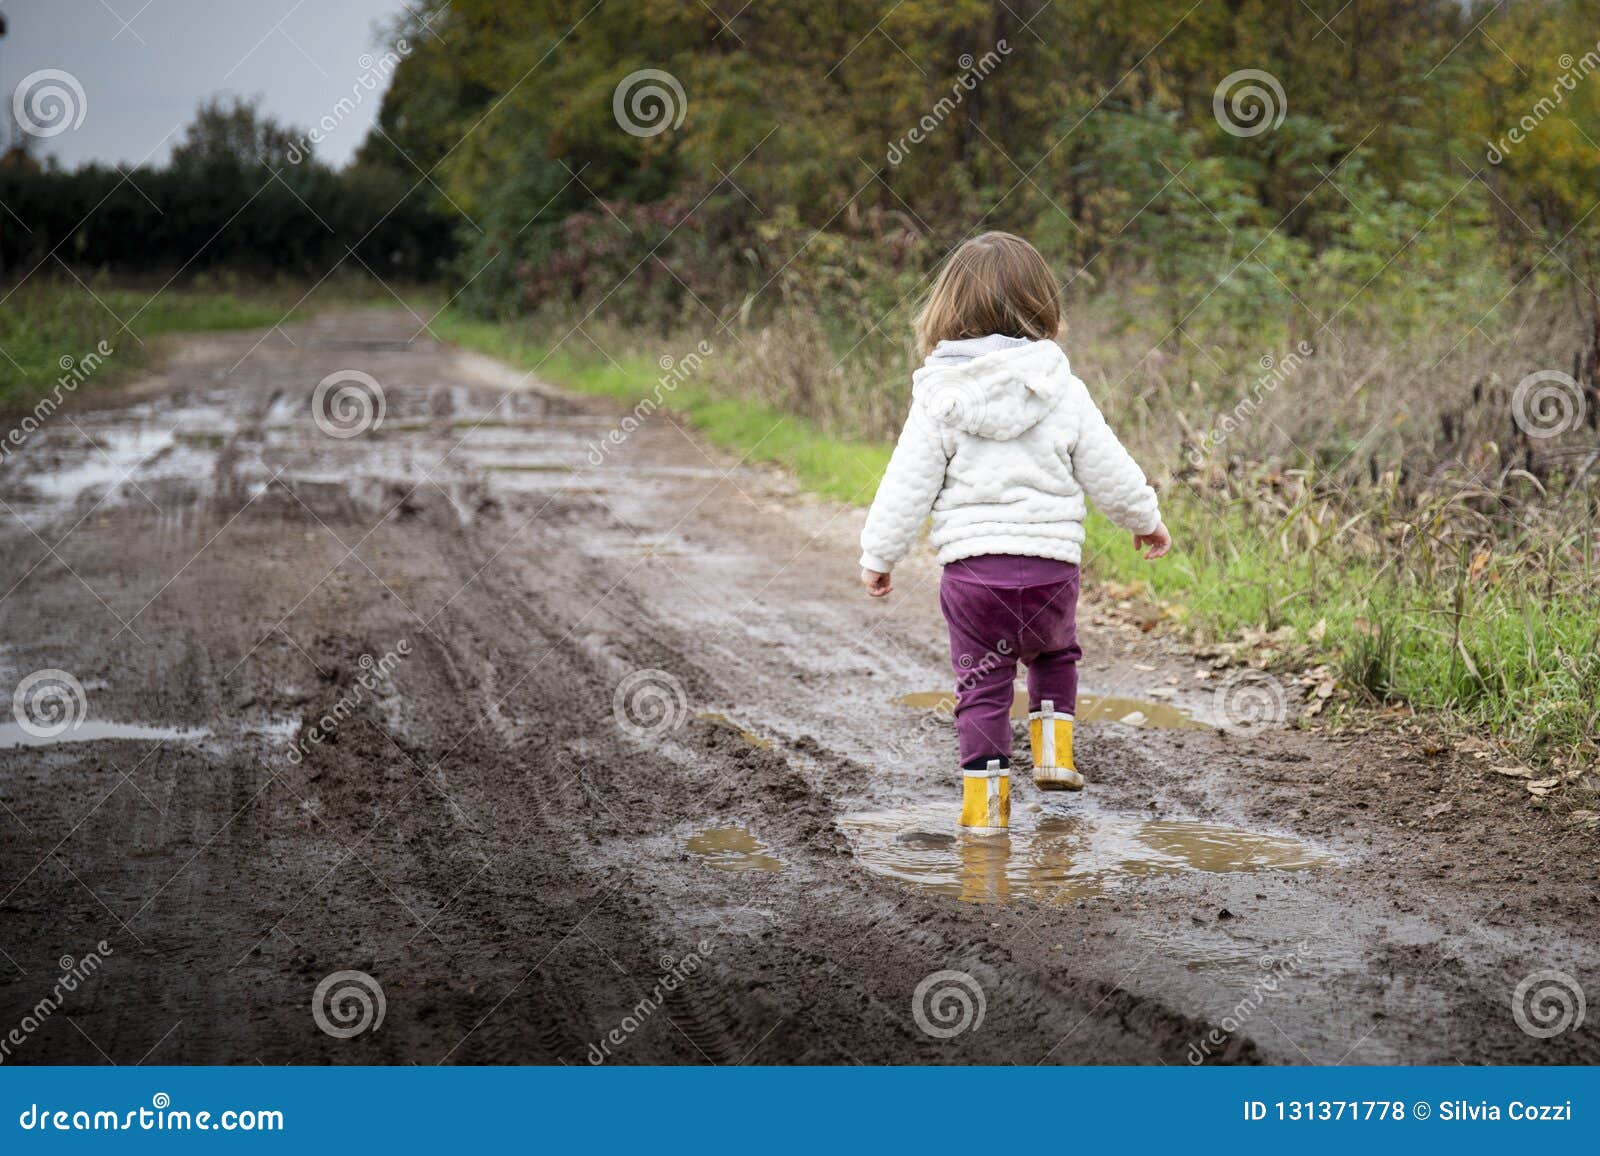 toddler splashing in puddles in muddy country road